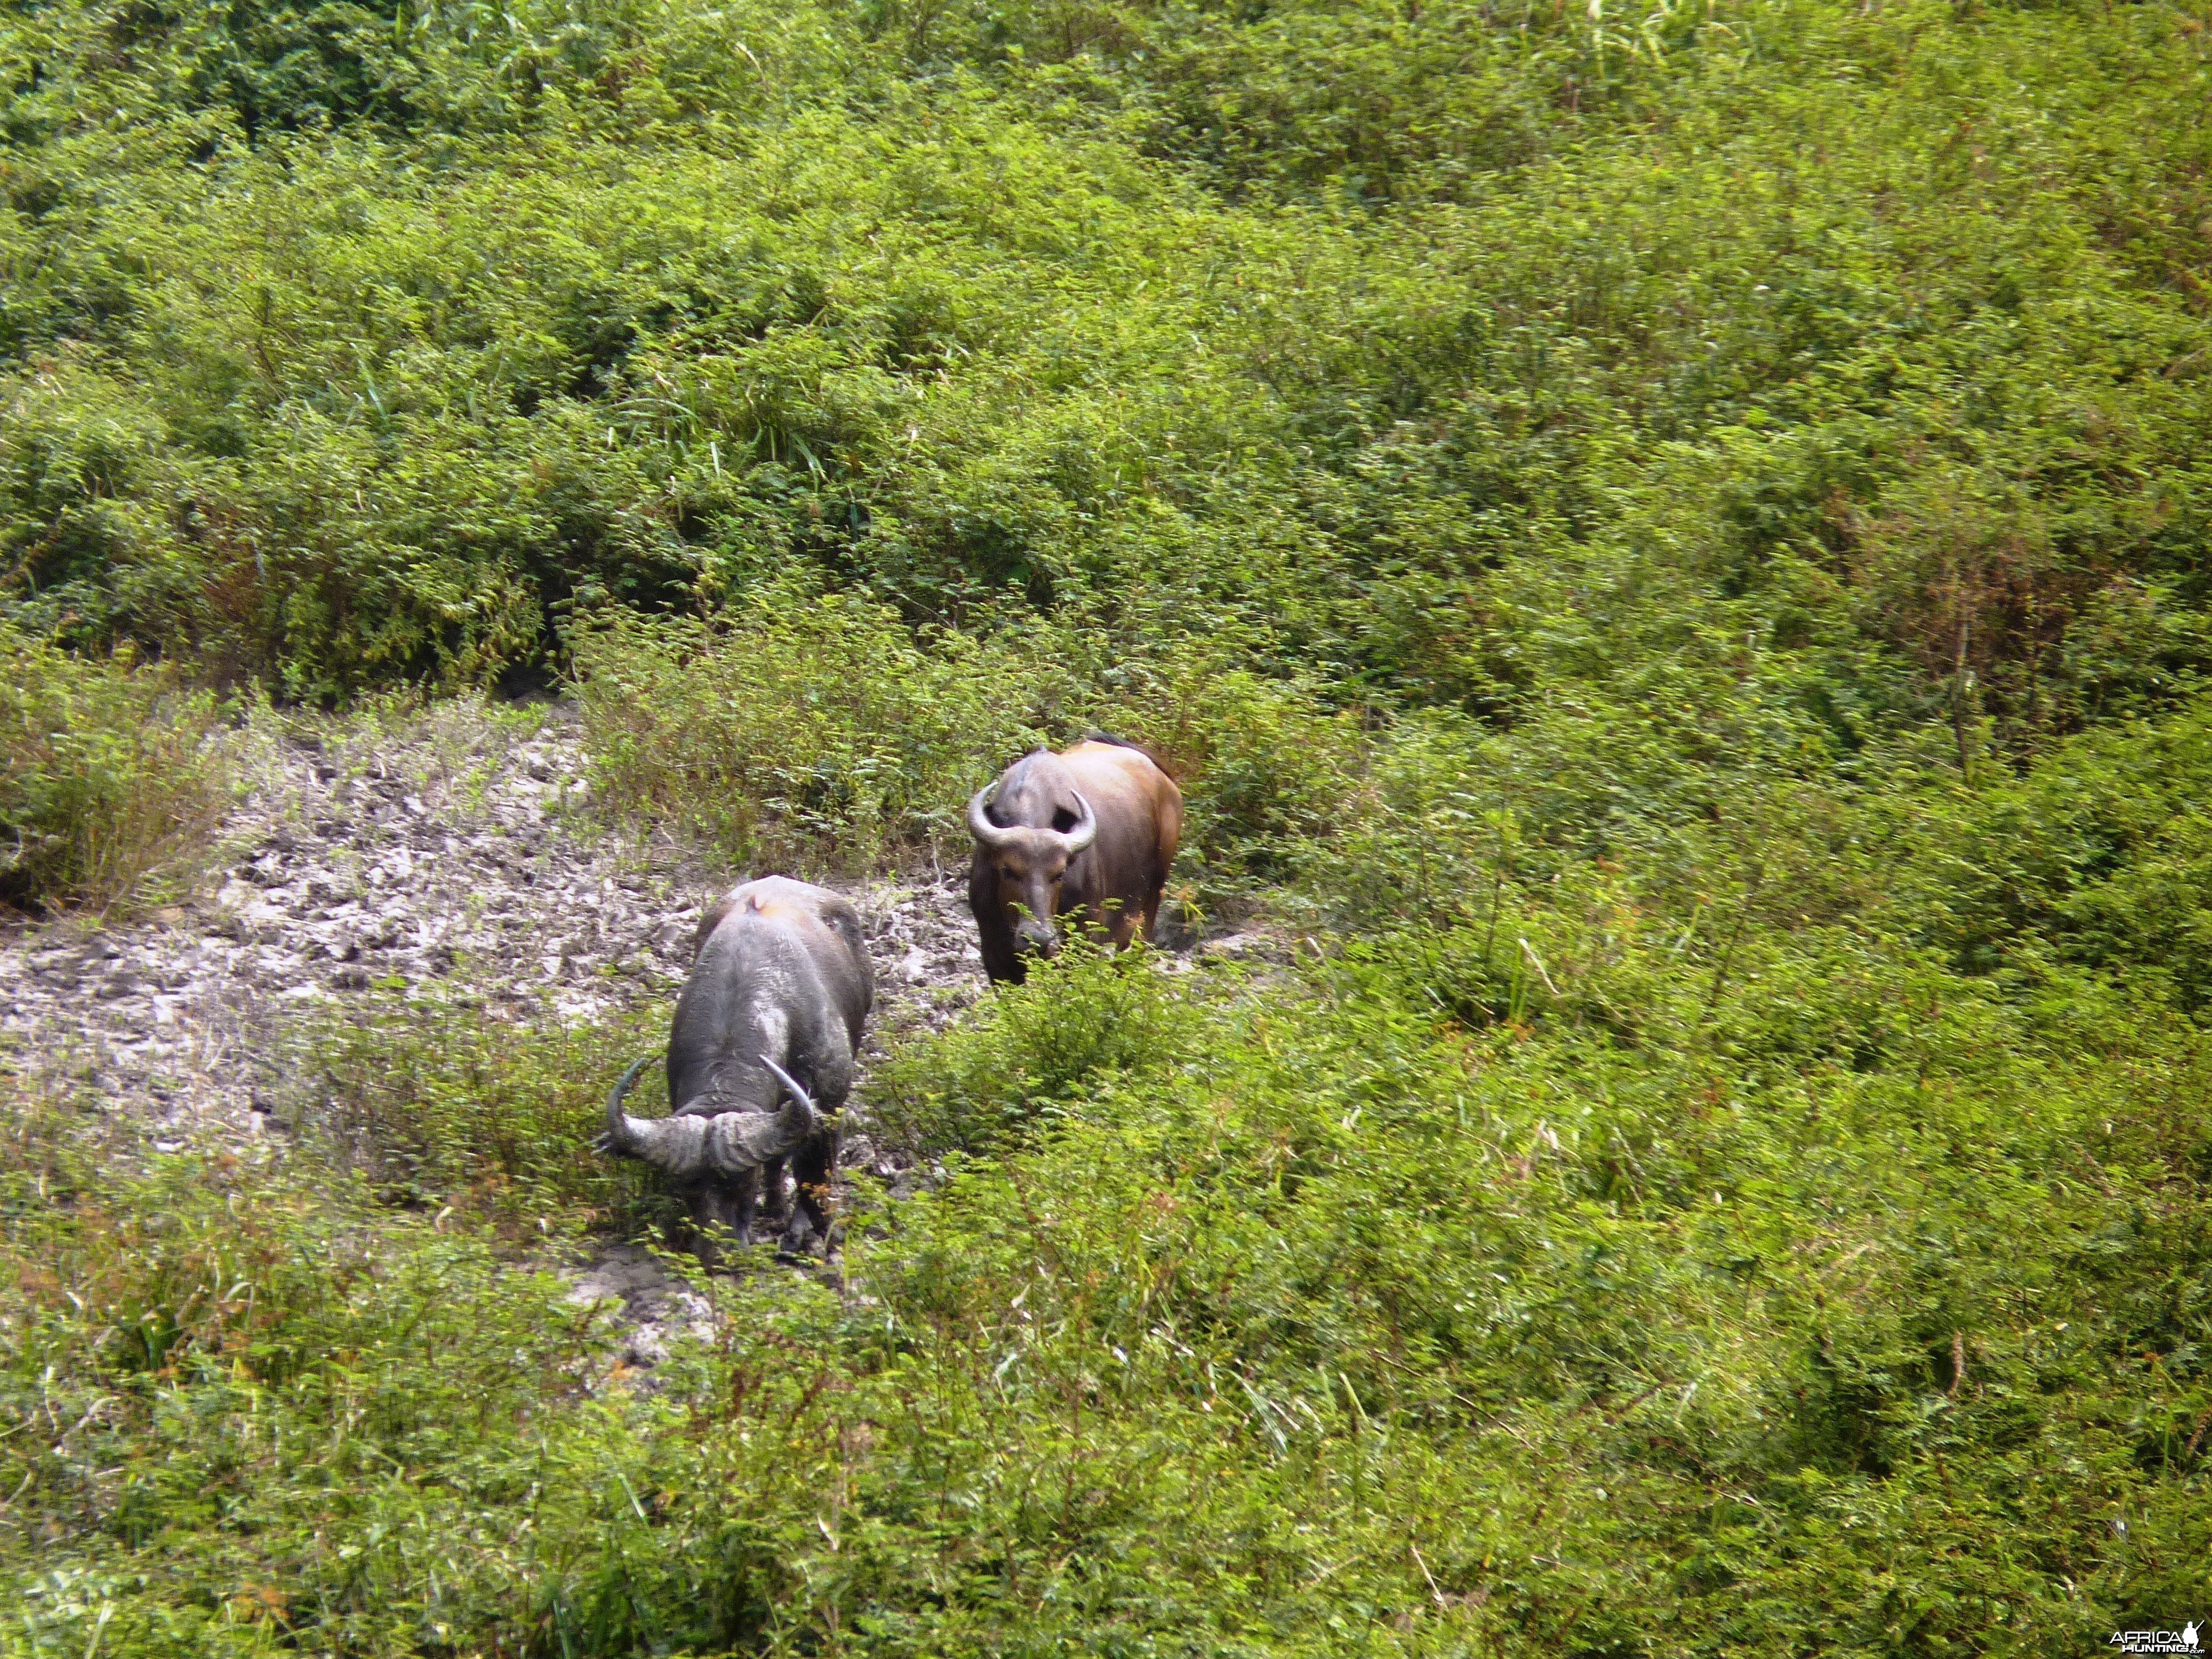 Buffalo in Central African Republic